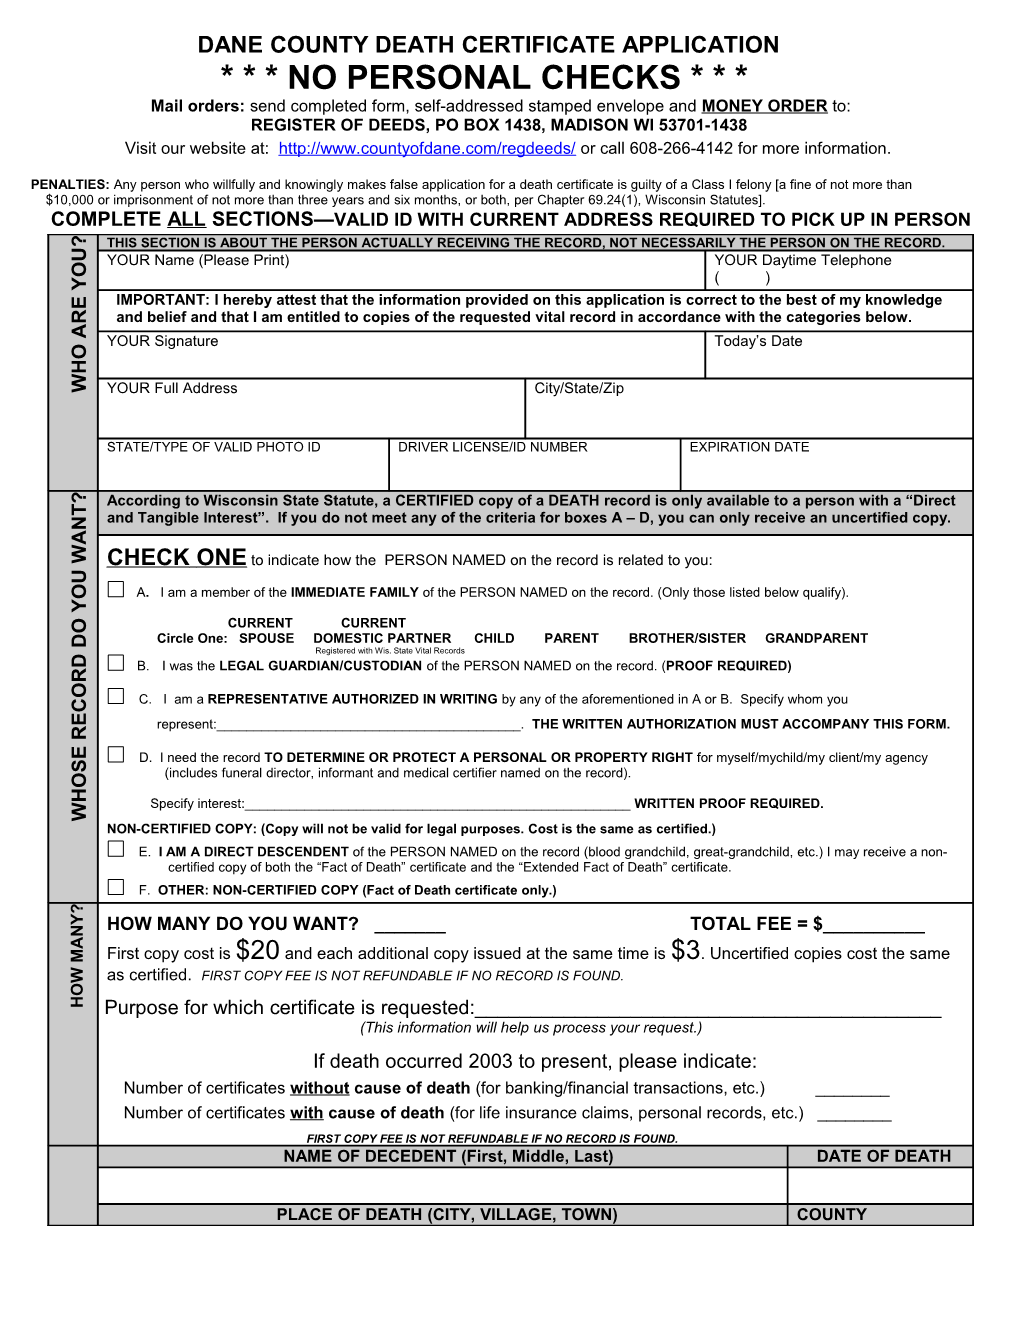 Dane County Death Certificate Application